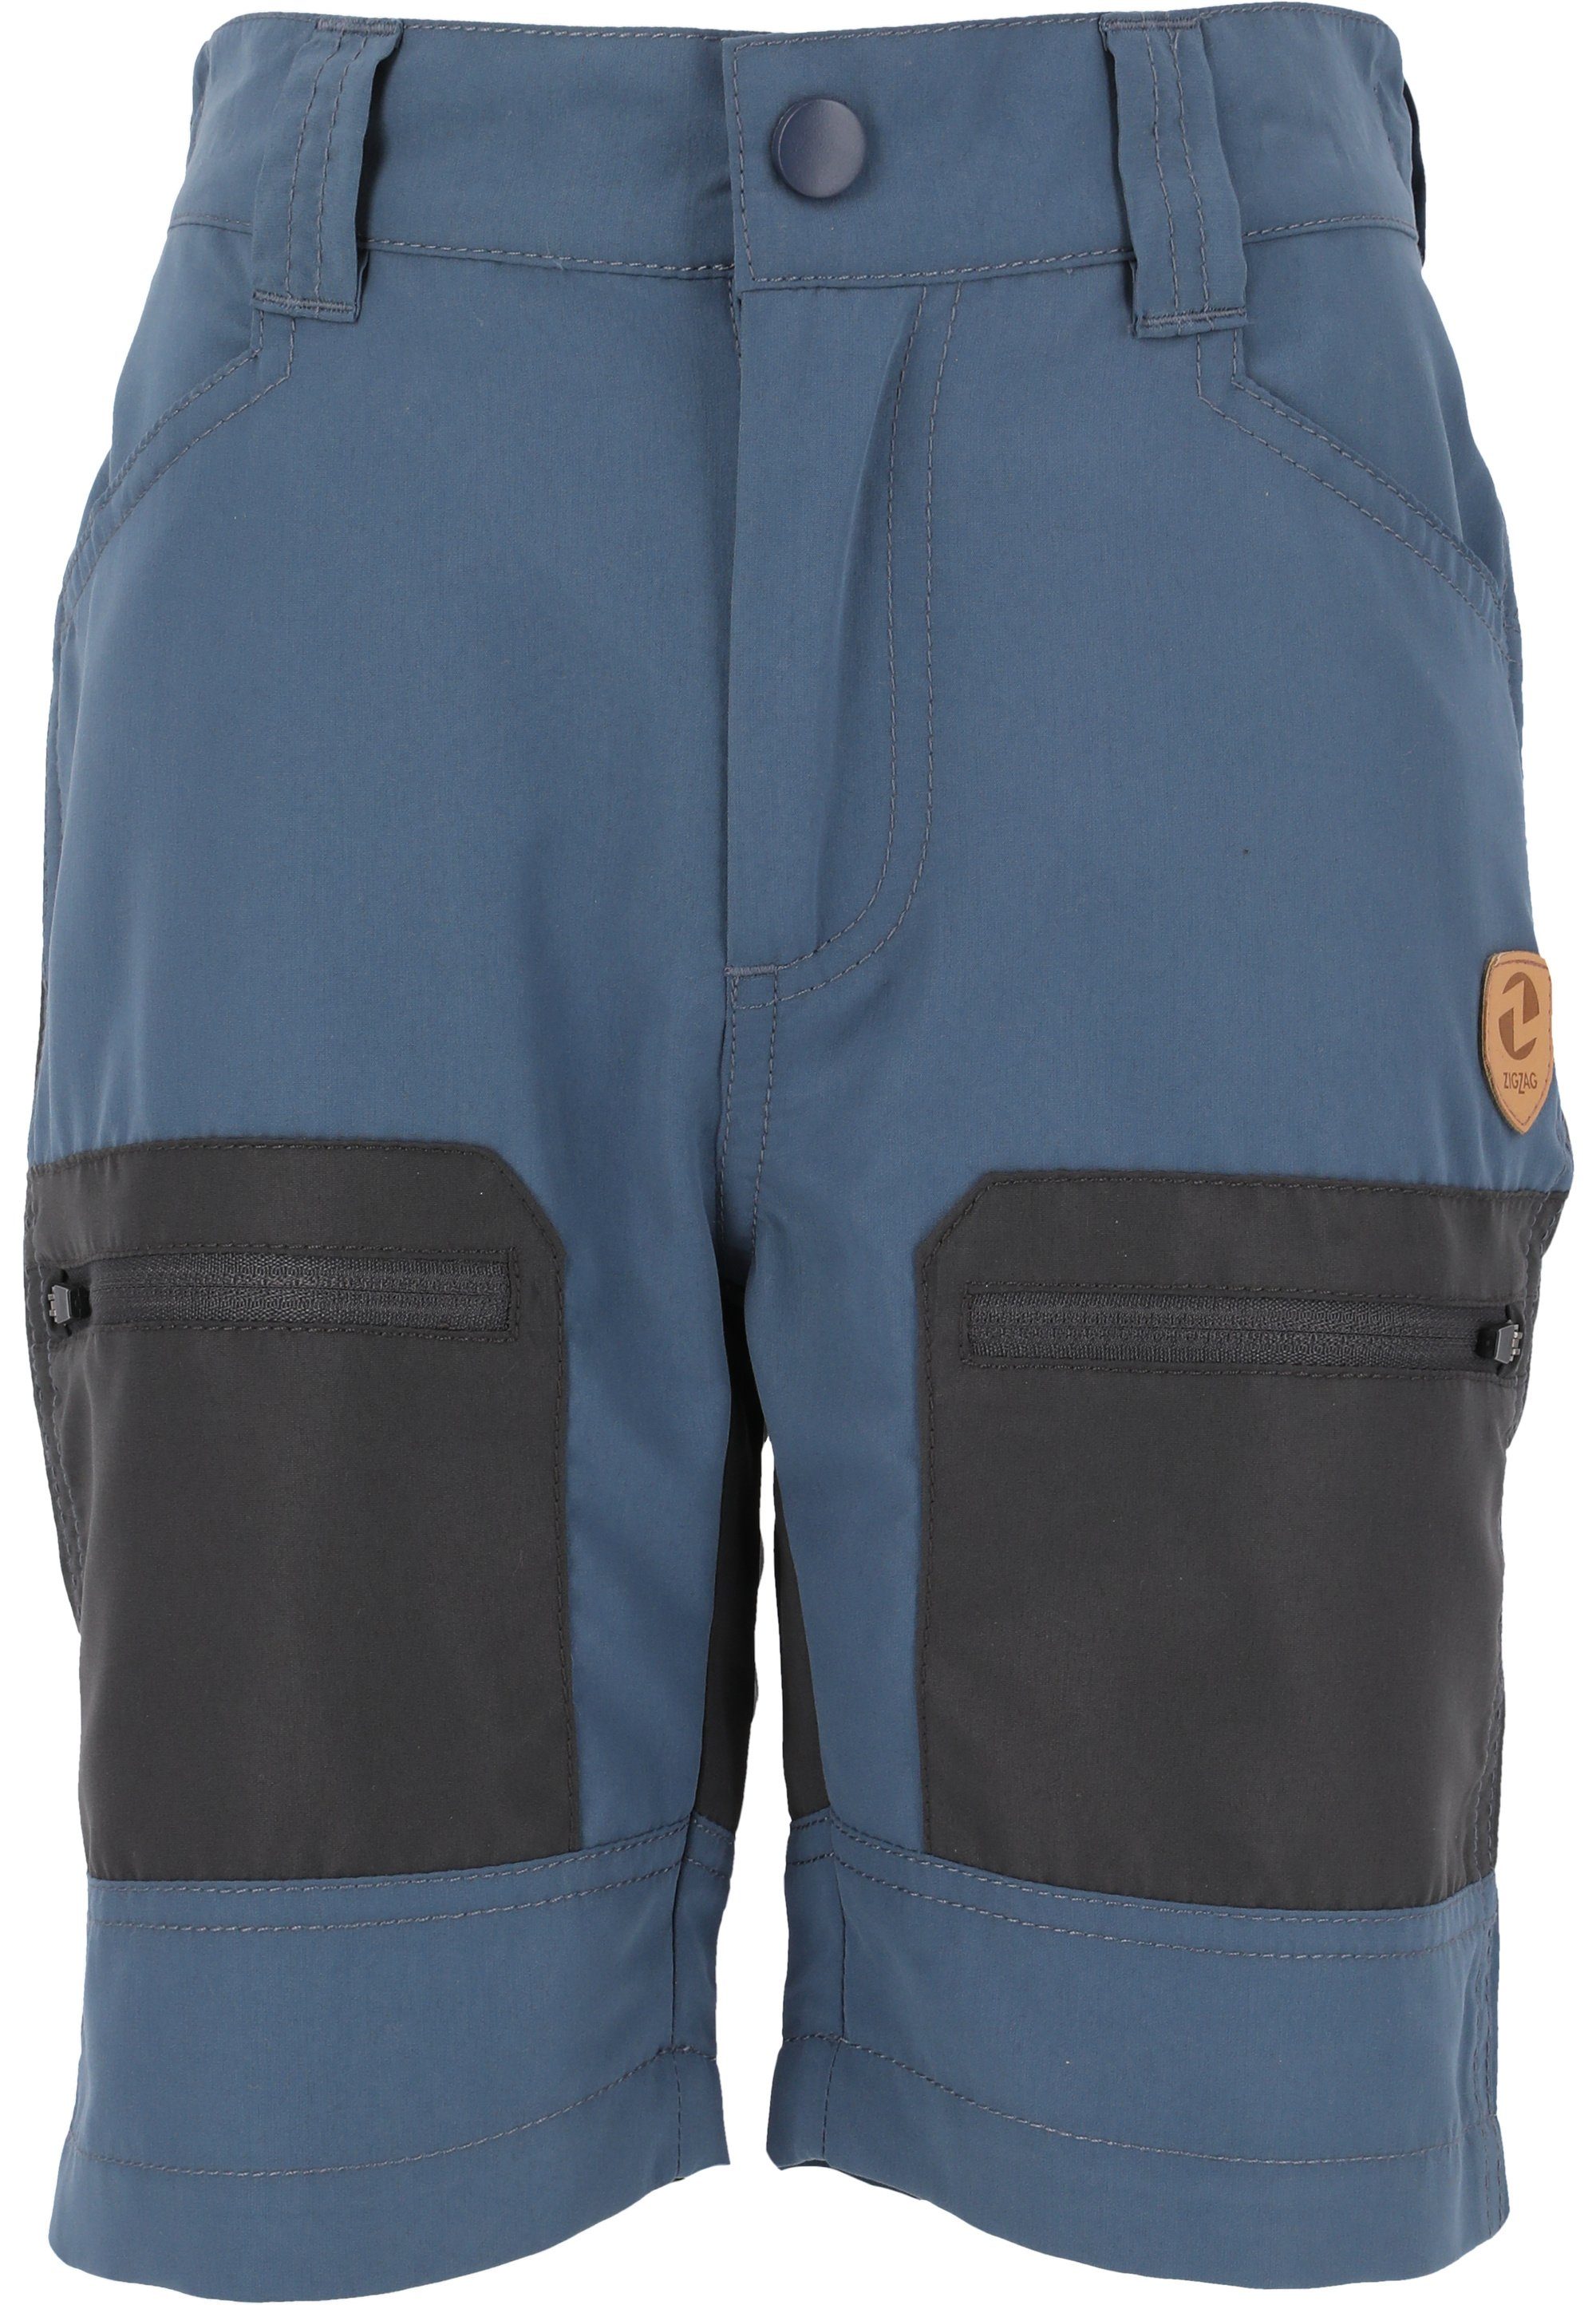 Material robustem Atlantic aus ZIGZAG blau-schwarz Shorts